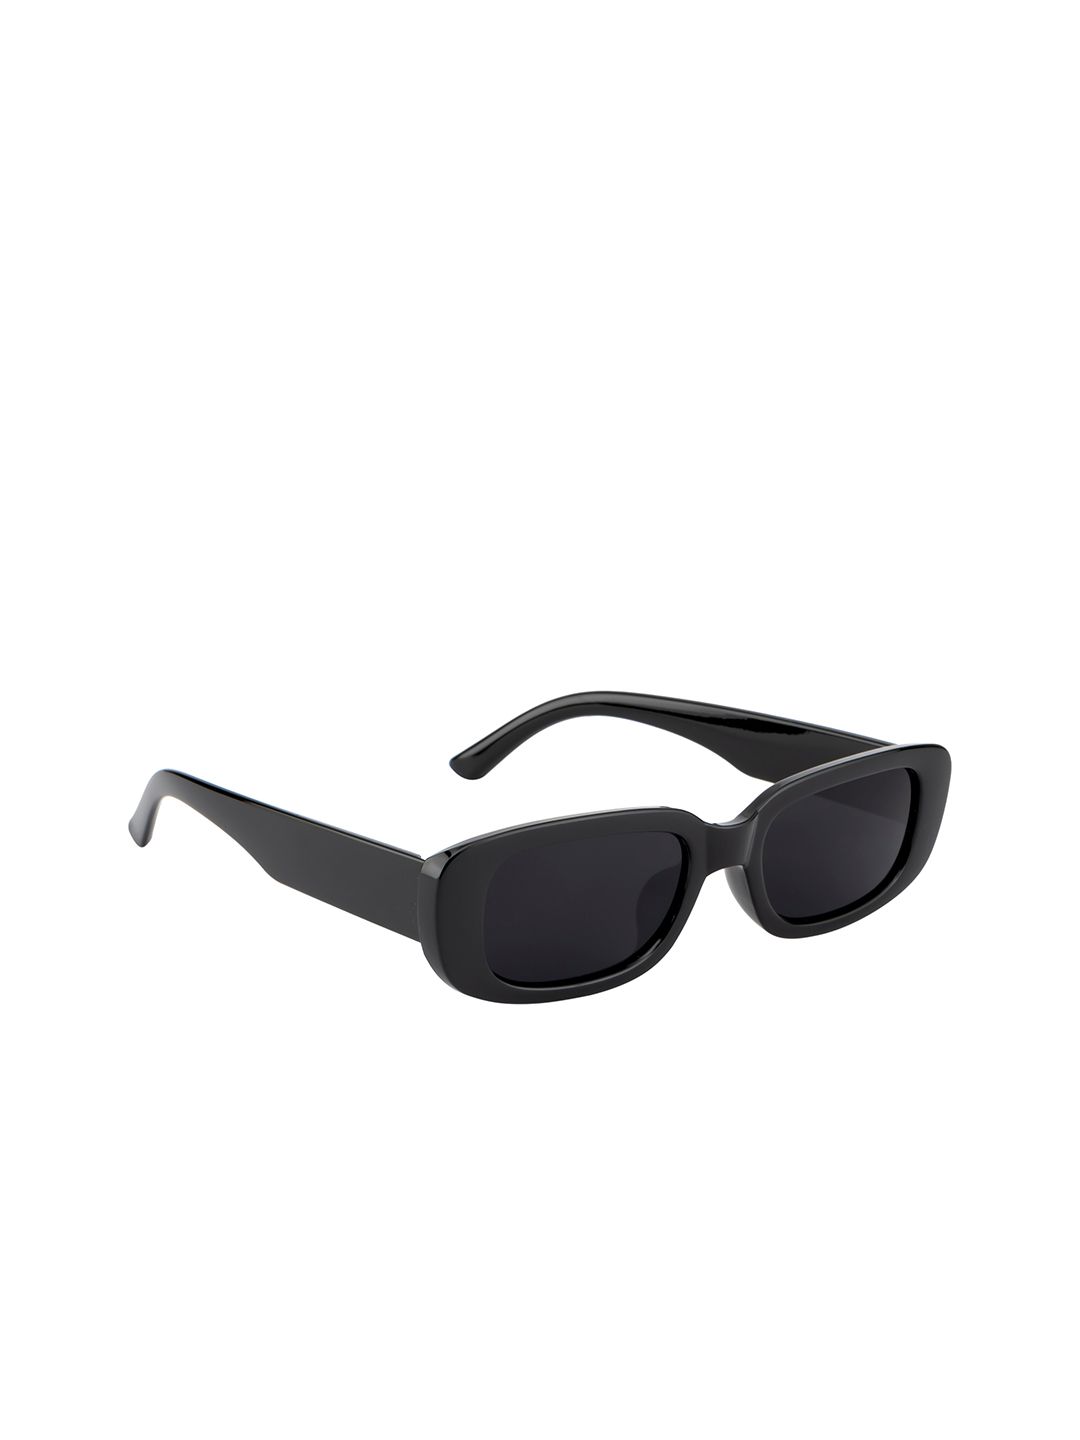 Ted Smith Unisex Black Full Rim Rectangle Sunglasses Price in India